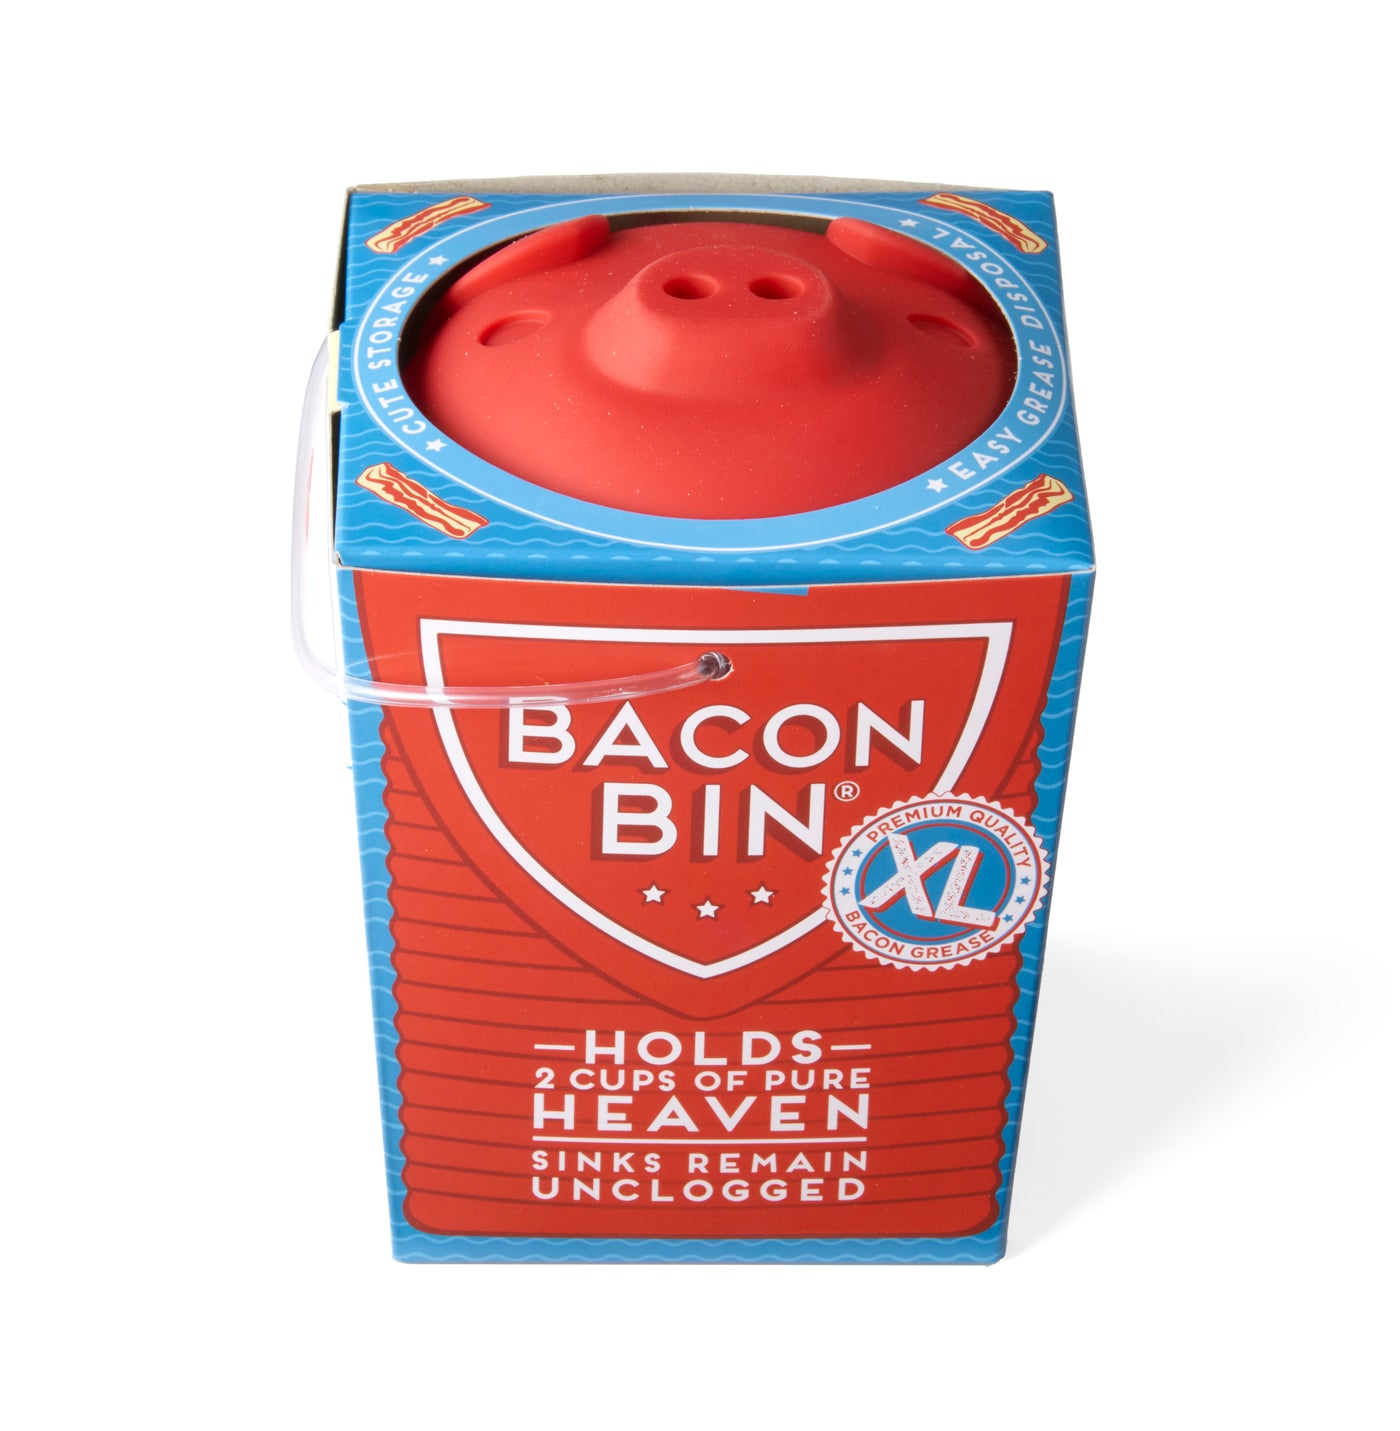 Bacon Bin – Talisman Designs